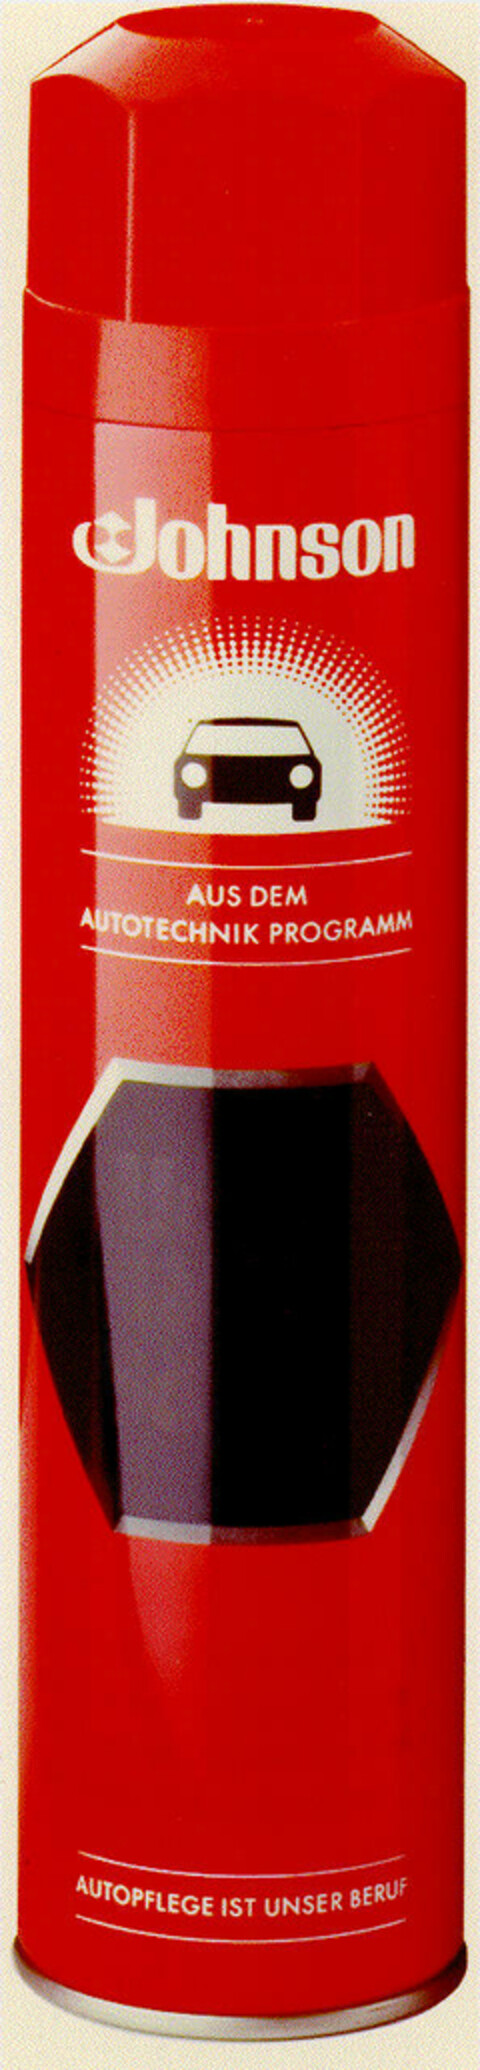 Johnson AUS DEM AUTOTECHNIK PROGRAMM Logo (DPMA, 06.10.1984)